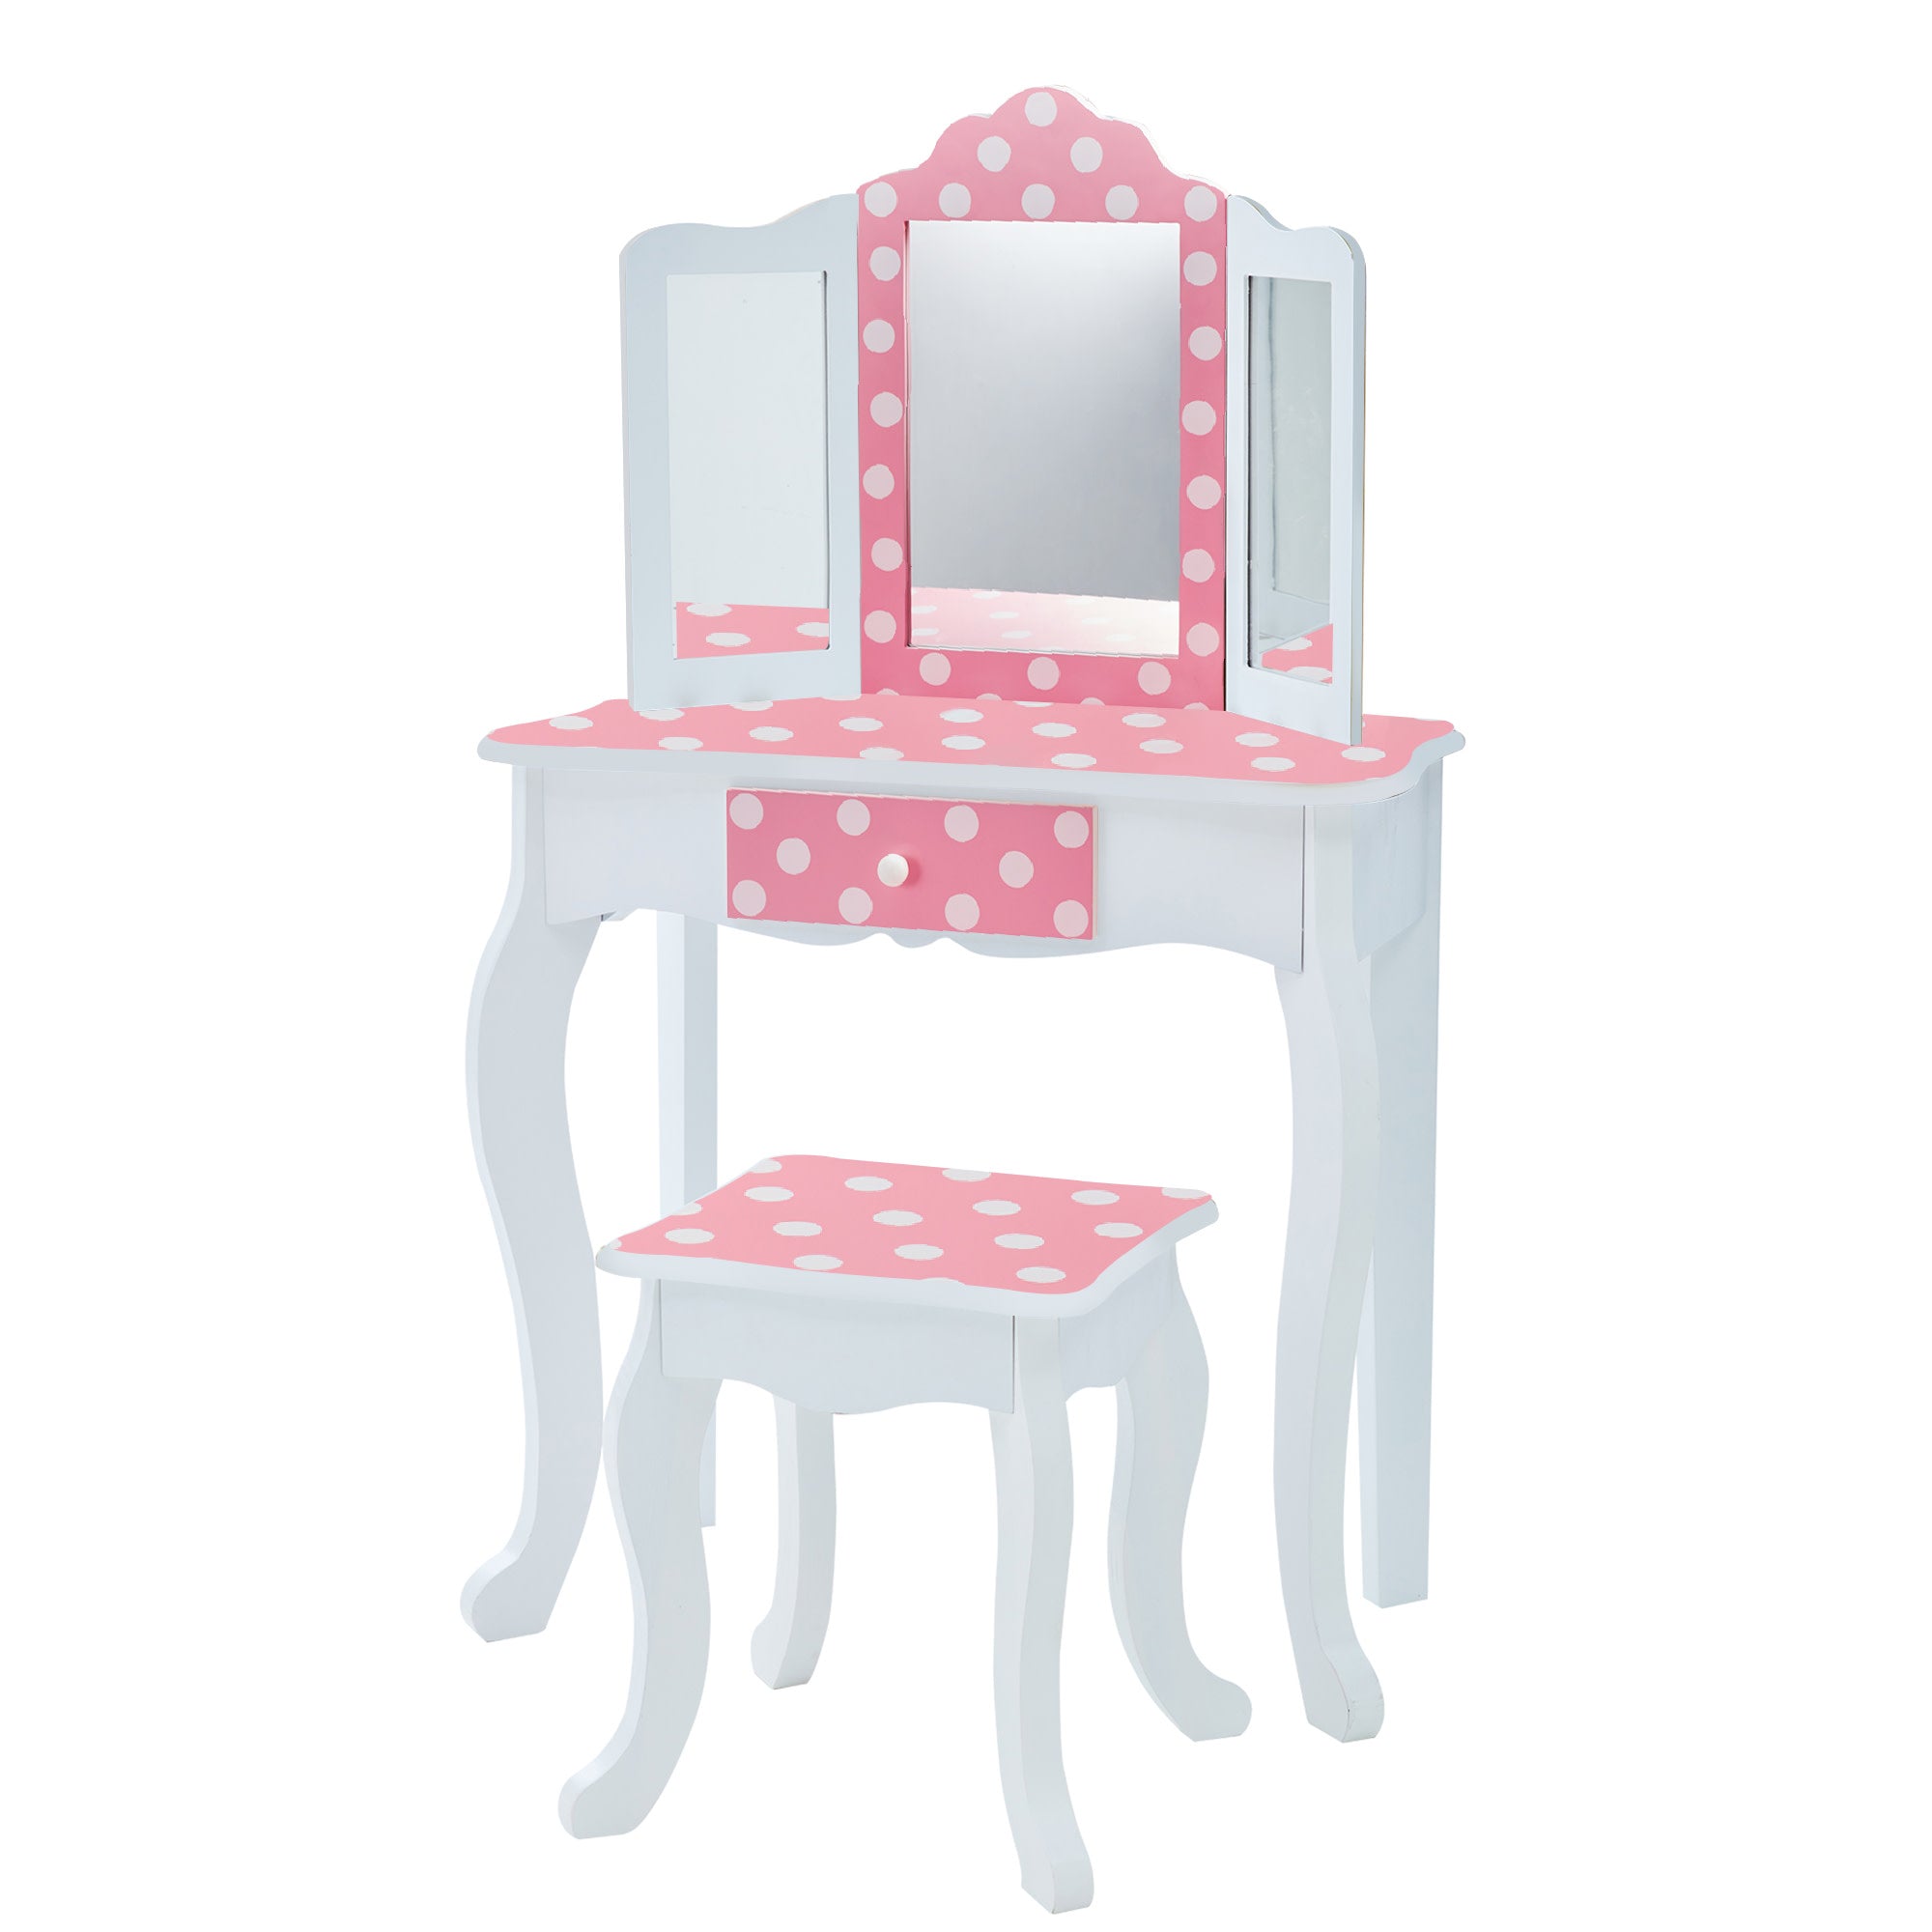 Teamson Kids Gisele Polka Dot Vanity Set with Tri-Fold Mirror, Pink/White